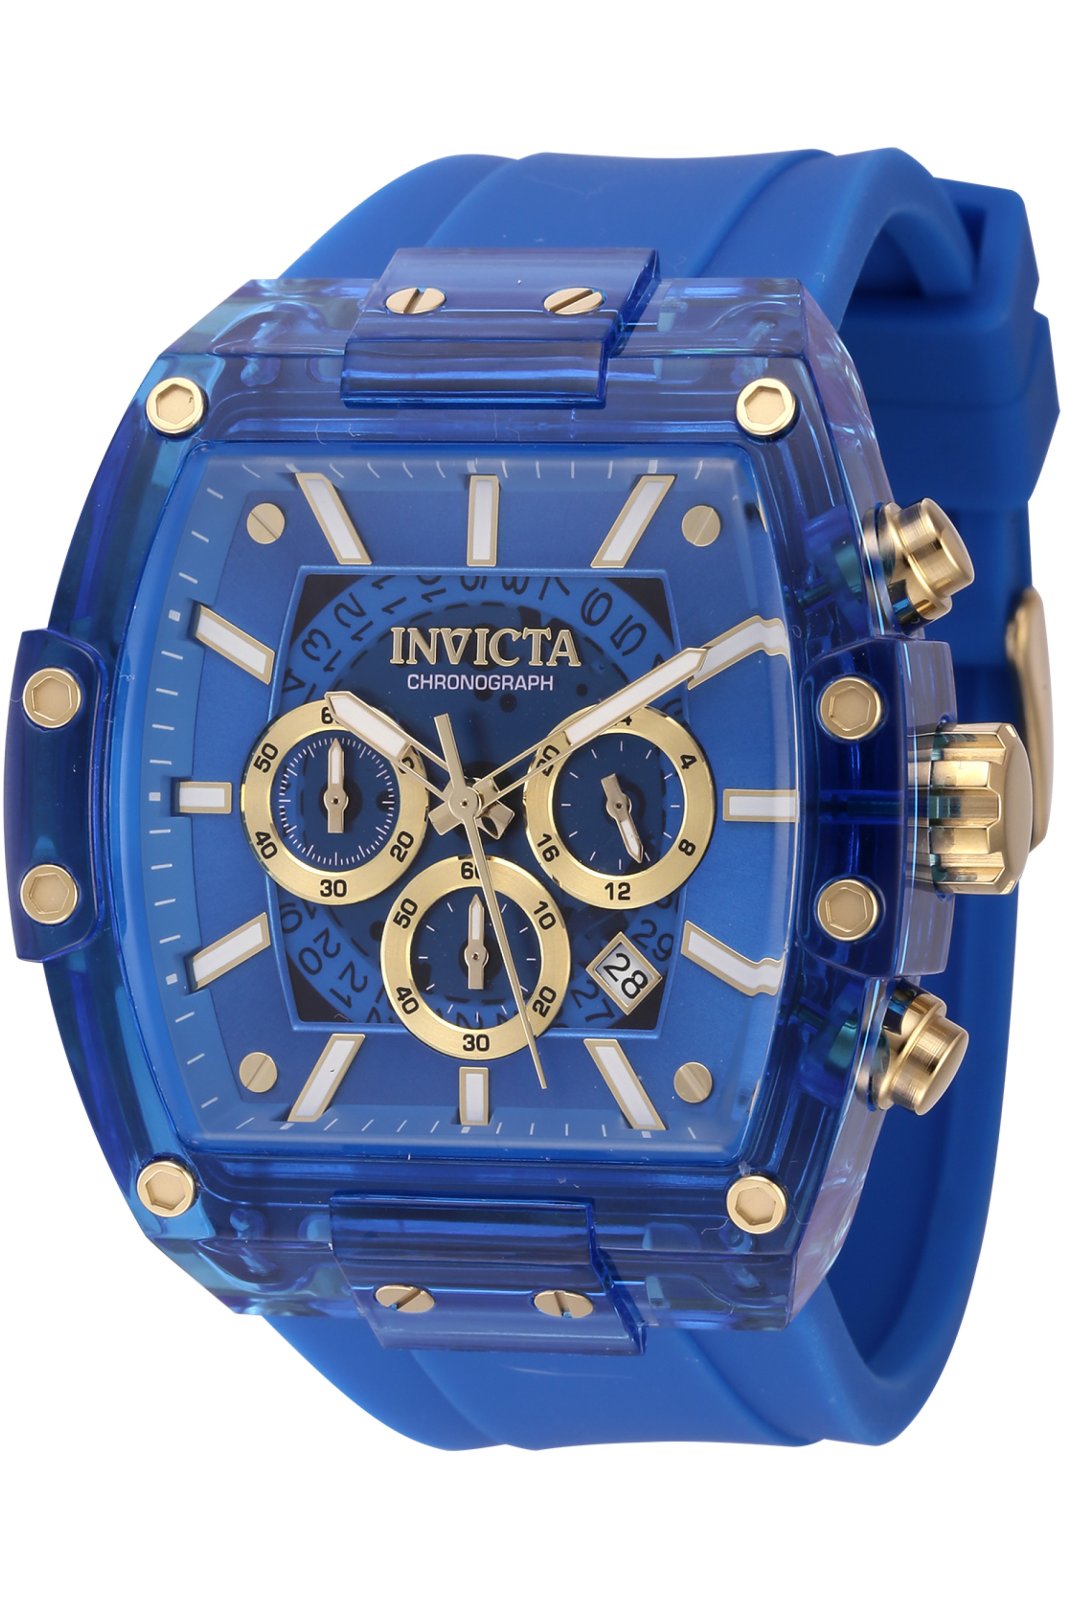 Invicta S1 Rally 44350 Men's Quartz Watch - 47mm